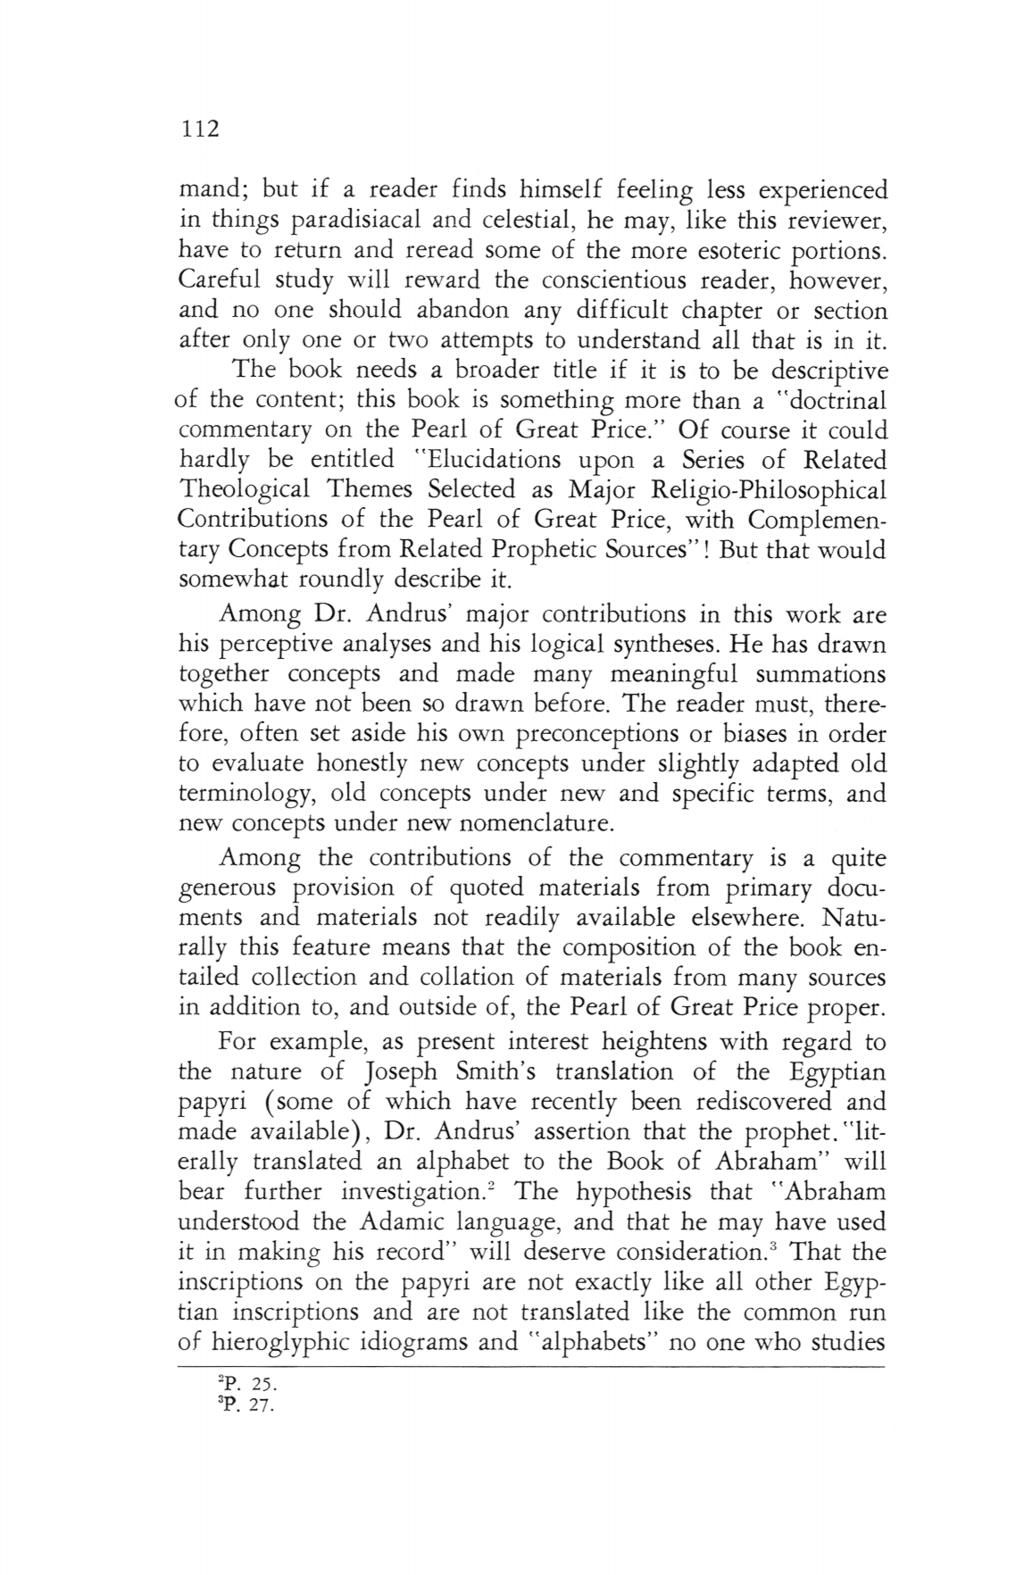 BYU Studies Quarterly, Vol. 9, Iss. 1 [1969], Art.